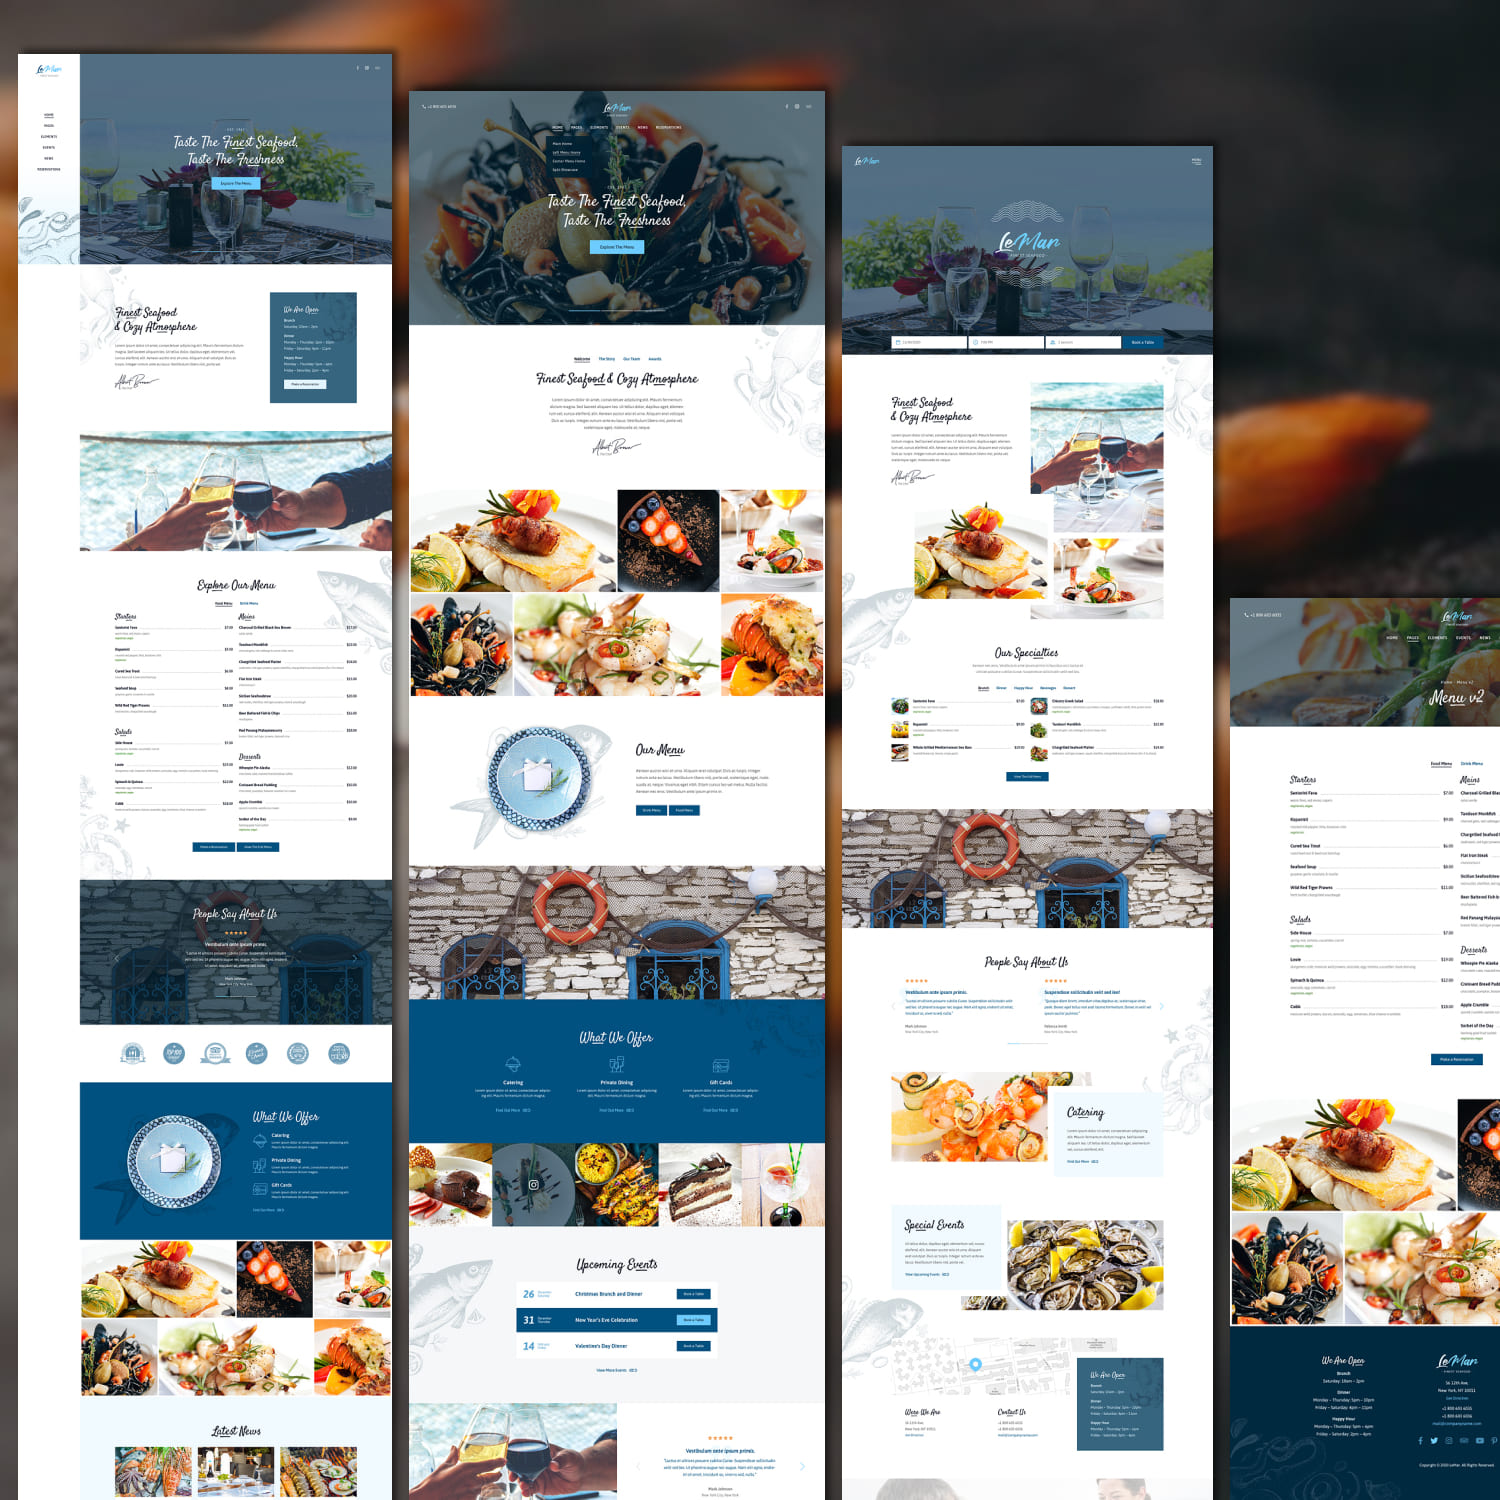 LeMar - Seafood Restaurant WordPress Theme cover.